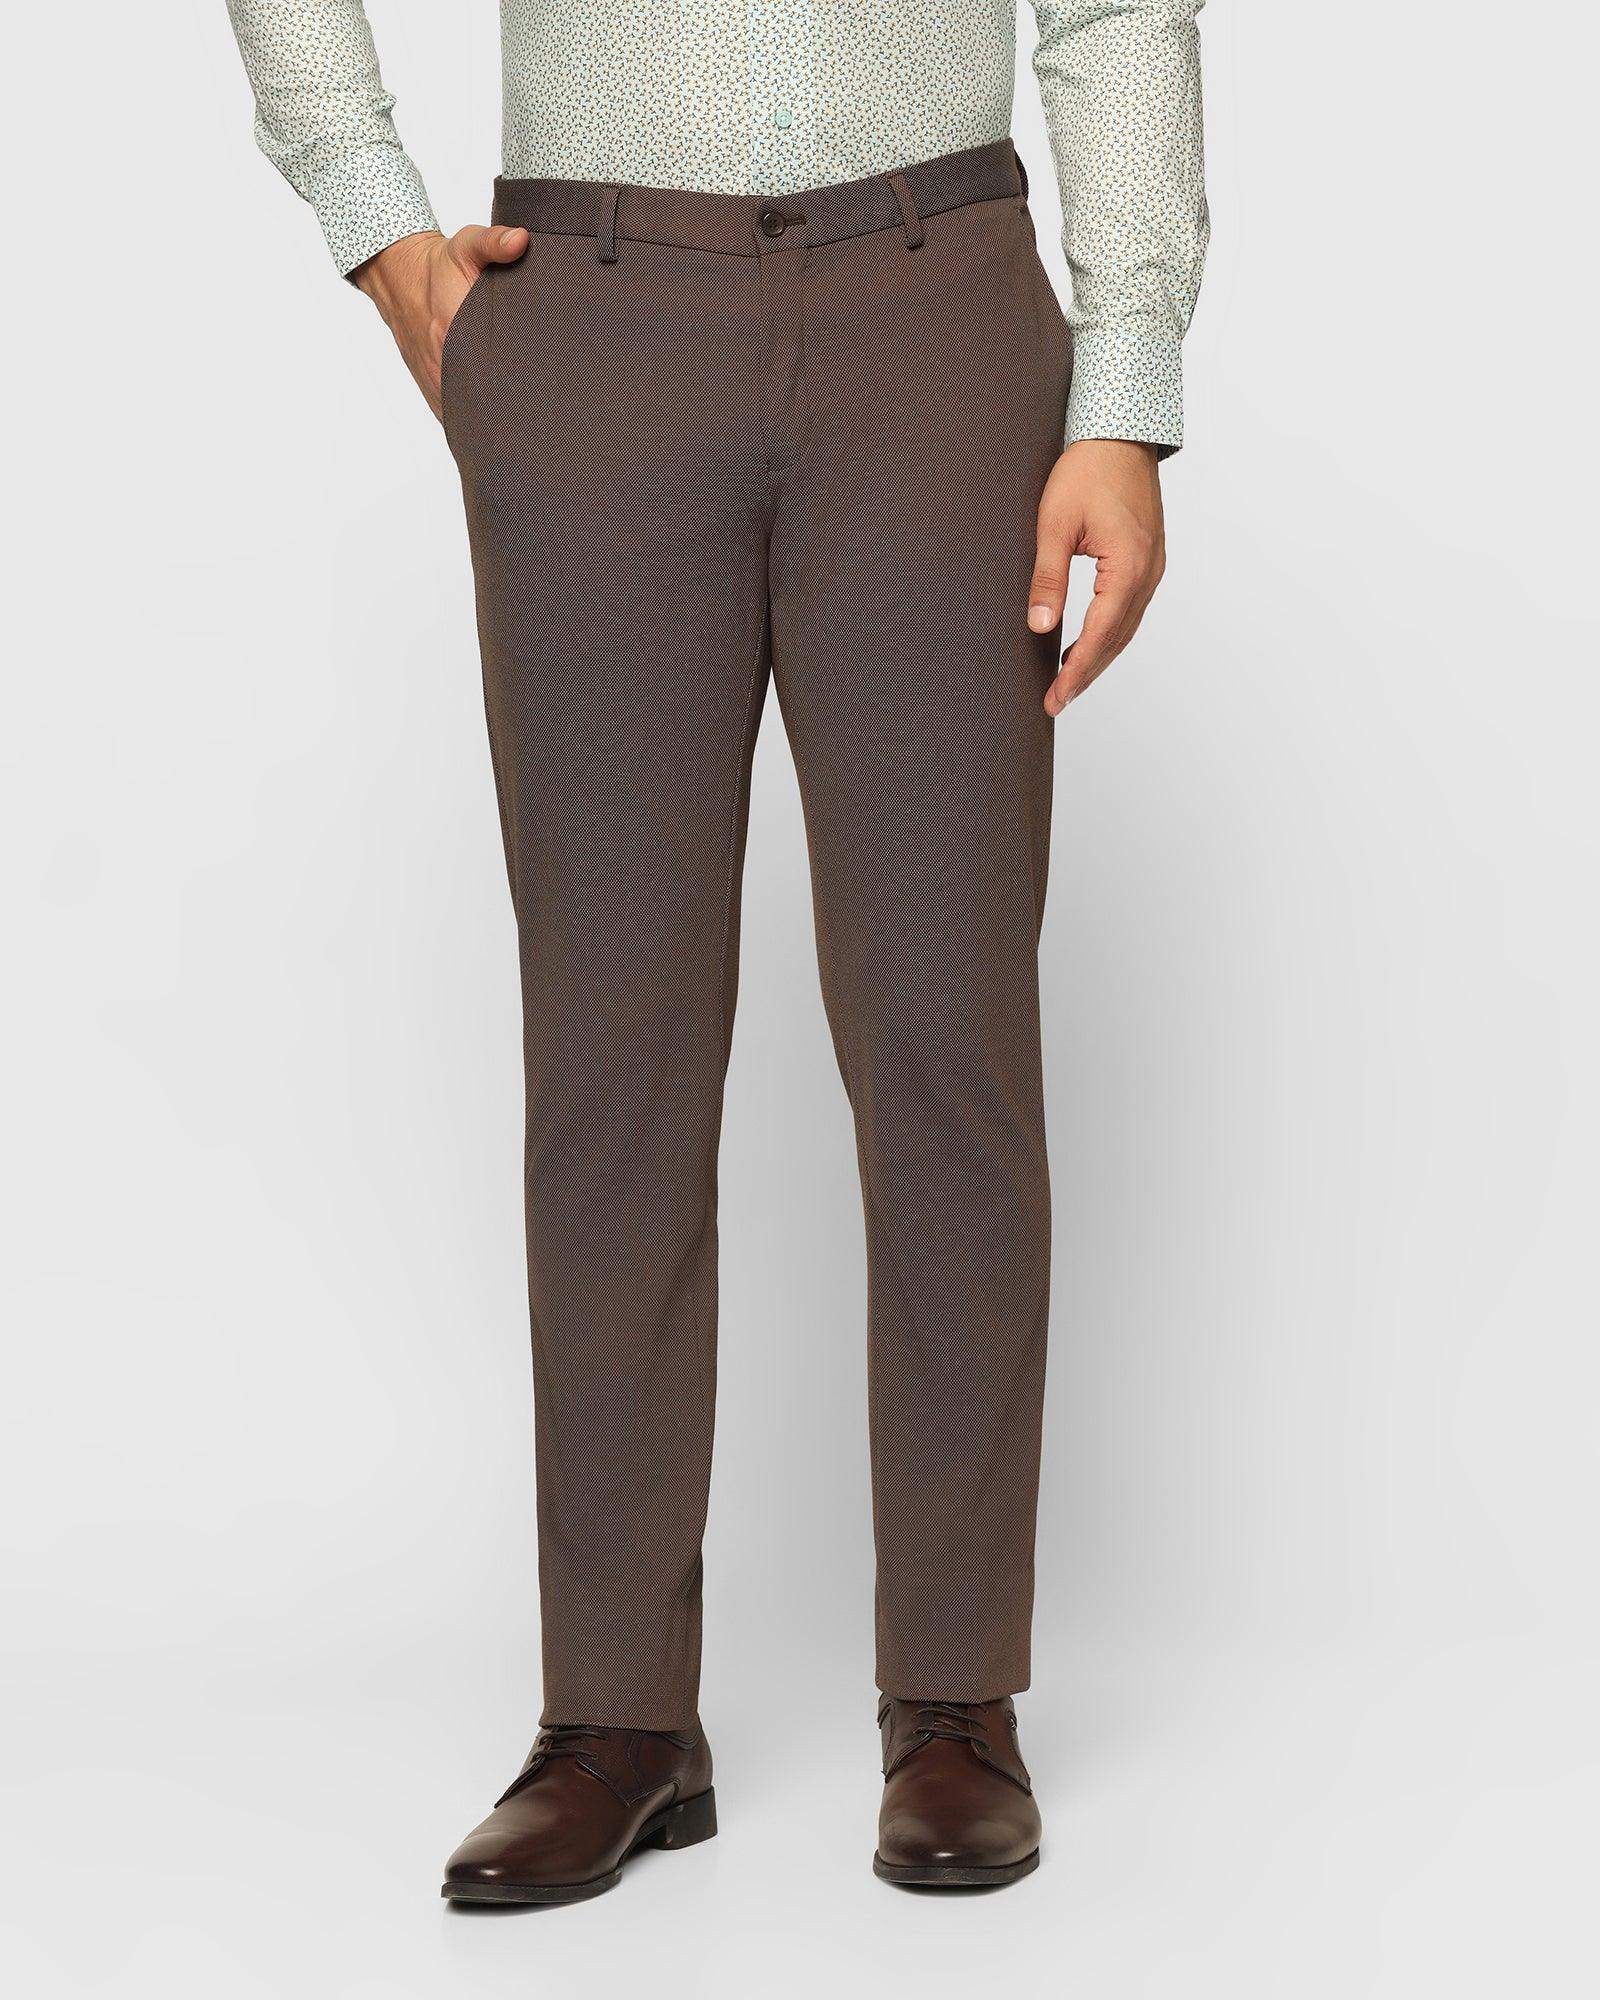 Slim Fit B-91 Formal Brown Textured Trouser - Roman